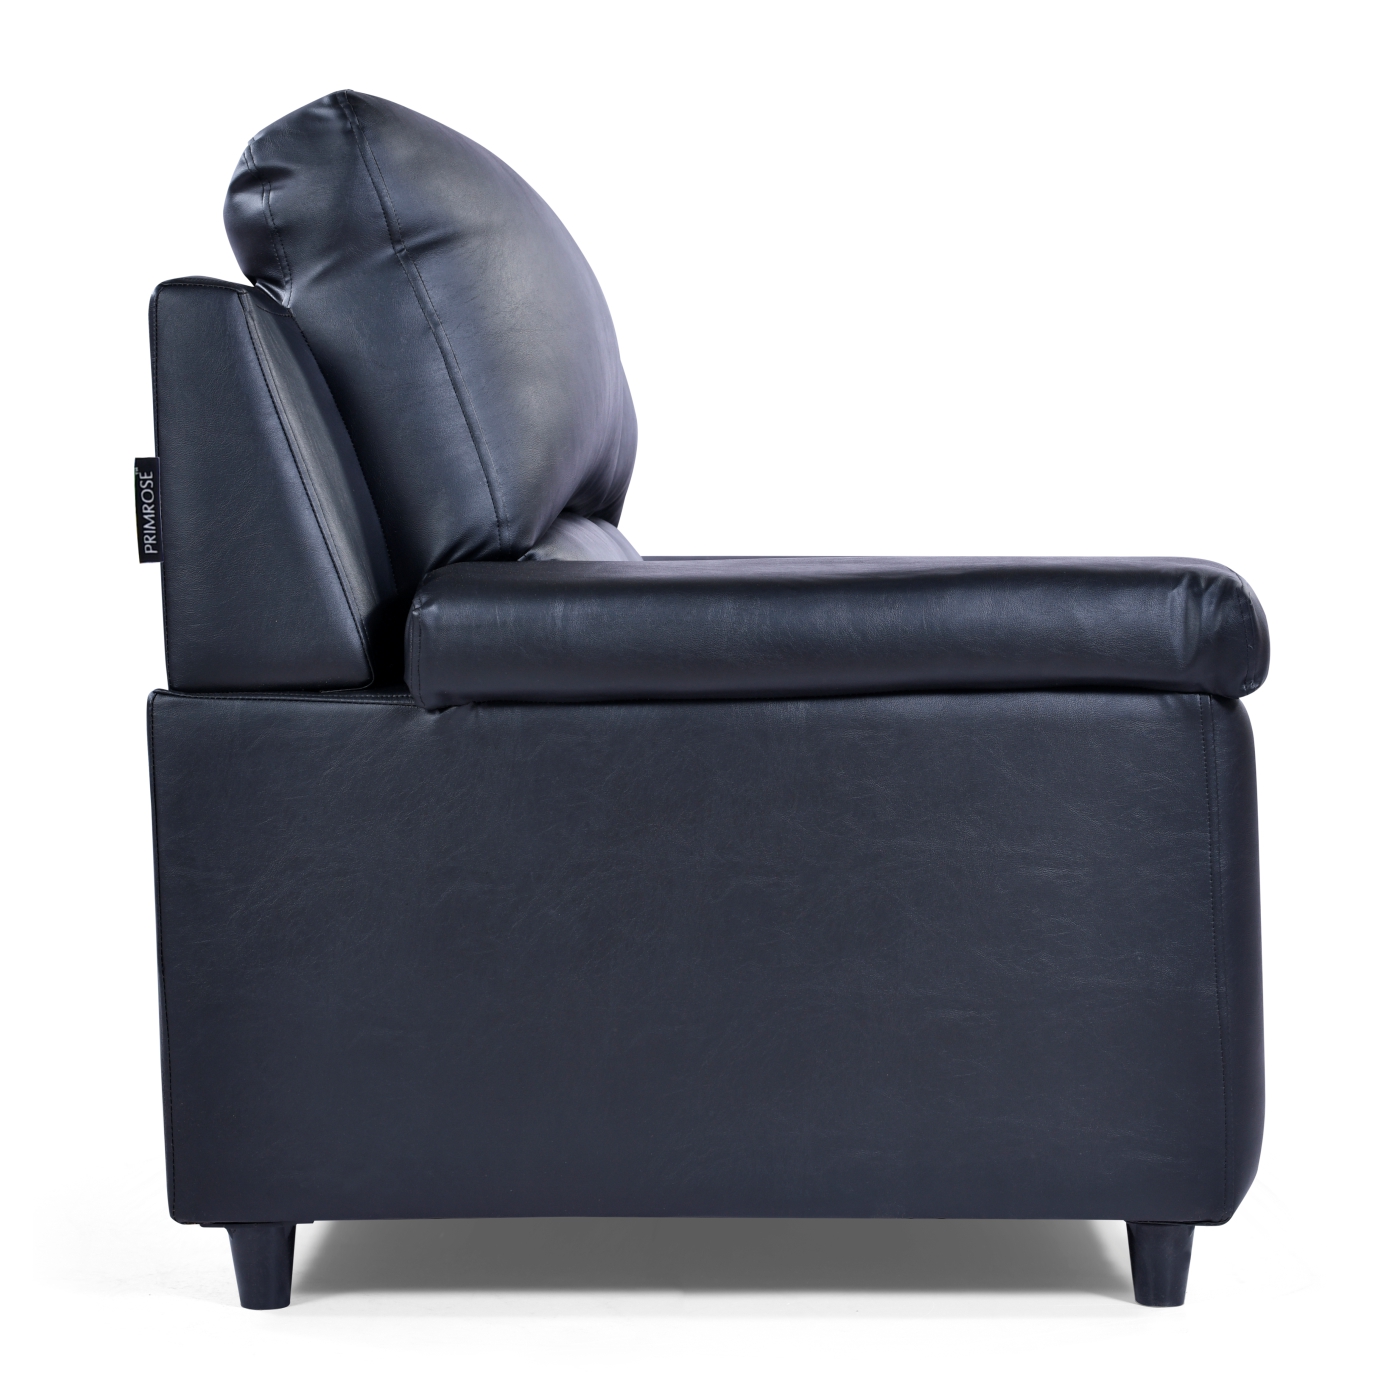 PRIMROSE Euphoria Art Leather Sofa Set Black